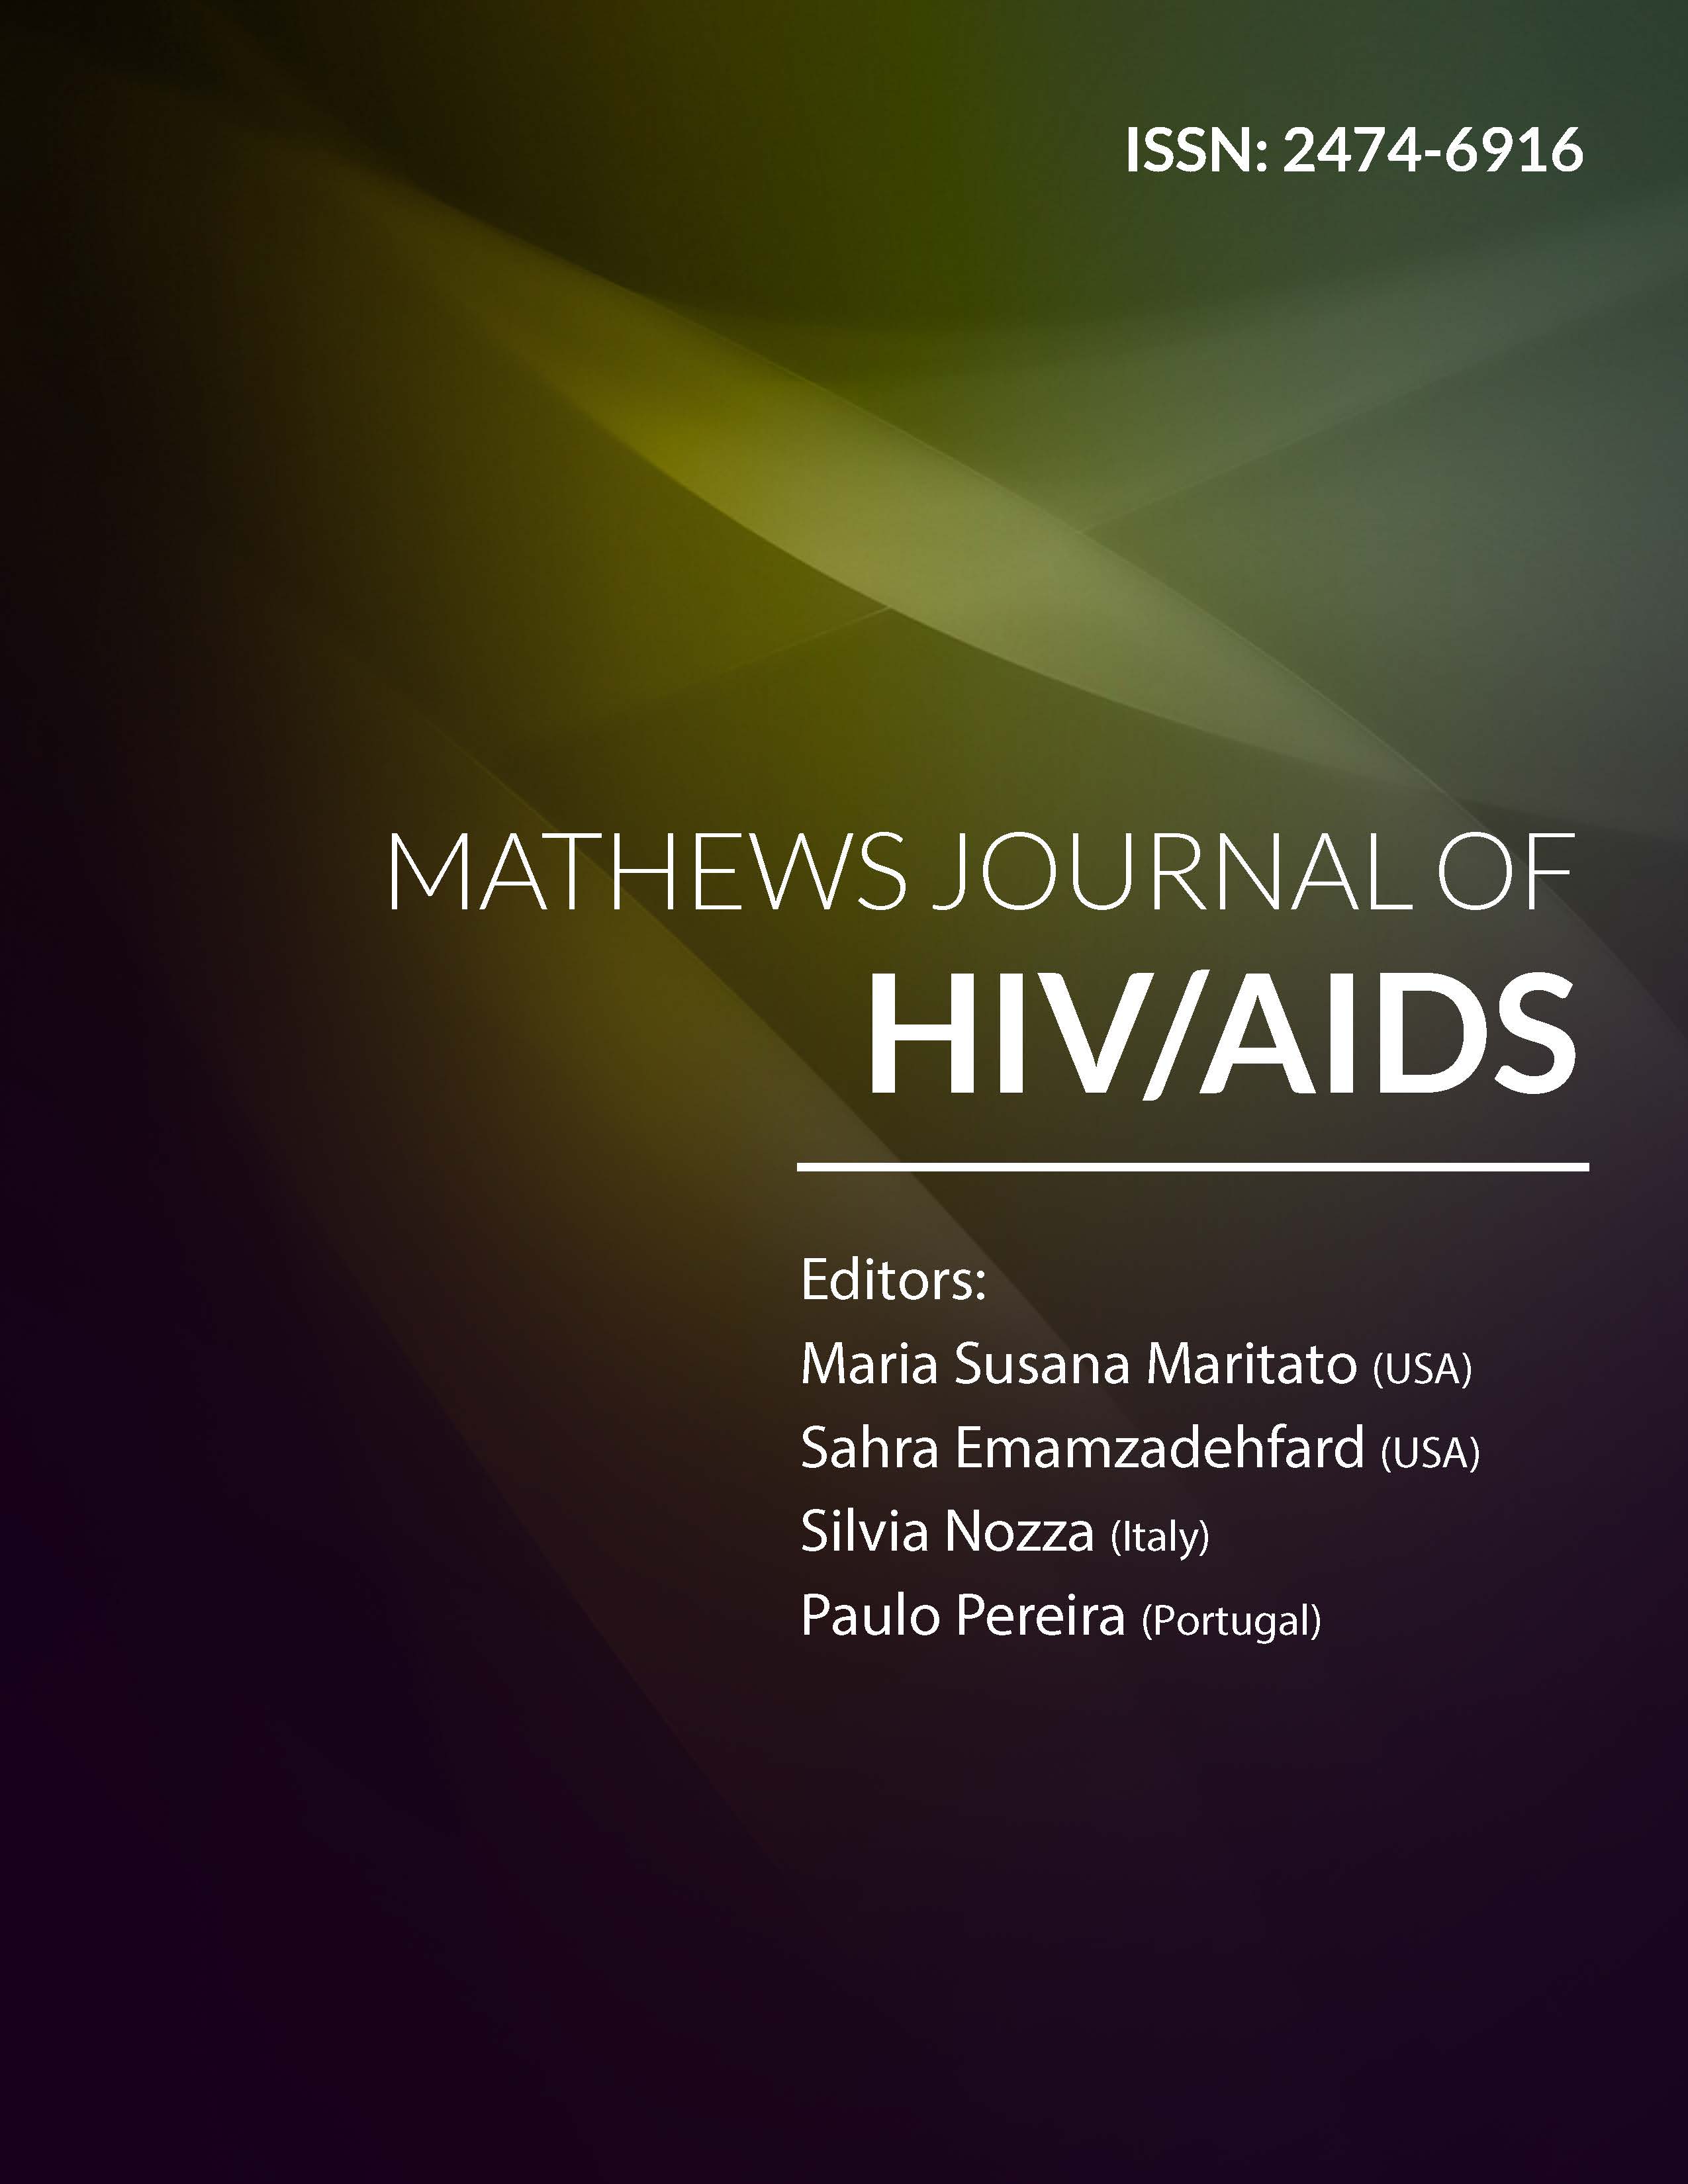 Mathews Journal of HIV/AIDS